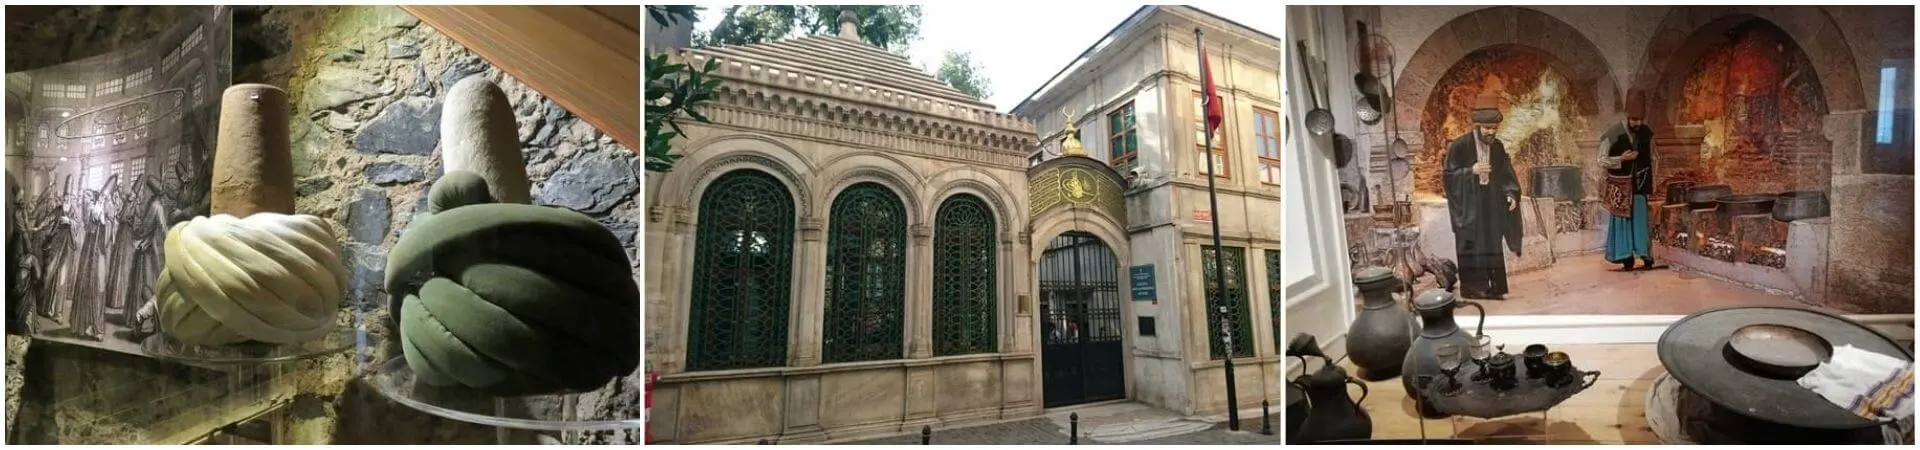 Museumseingang Galata Mevlevi Lodge